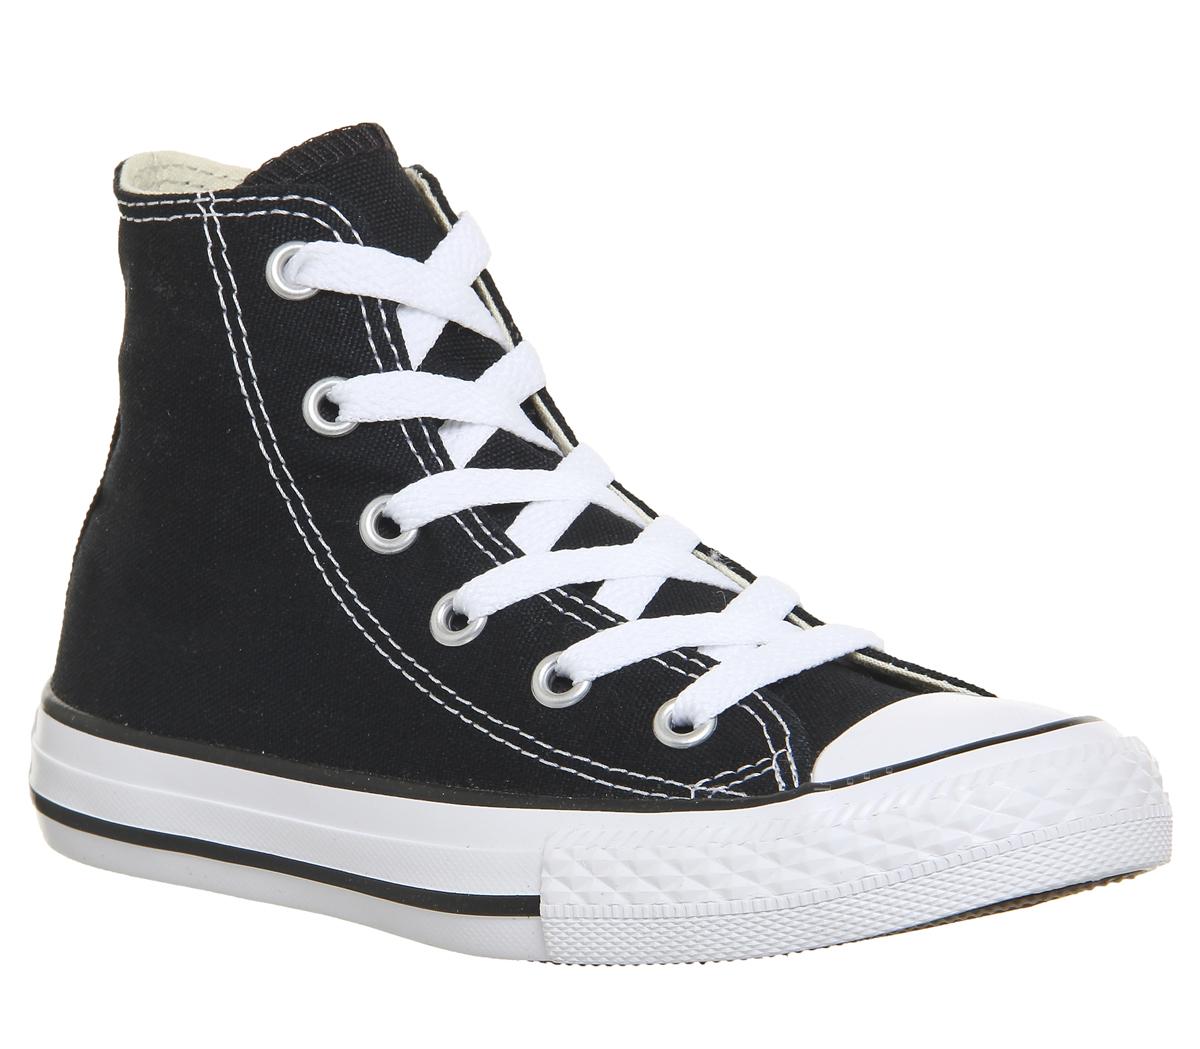 Converse All Star Hi Mid Sizes Black White - Unisex